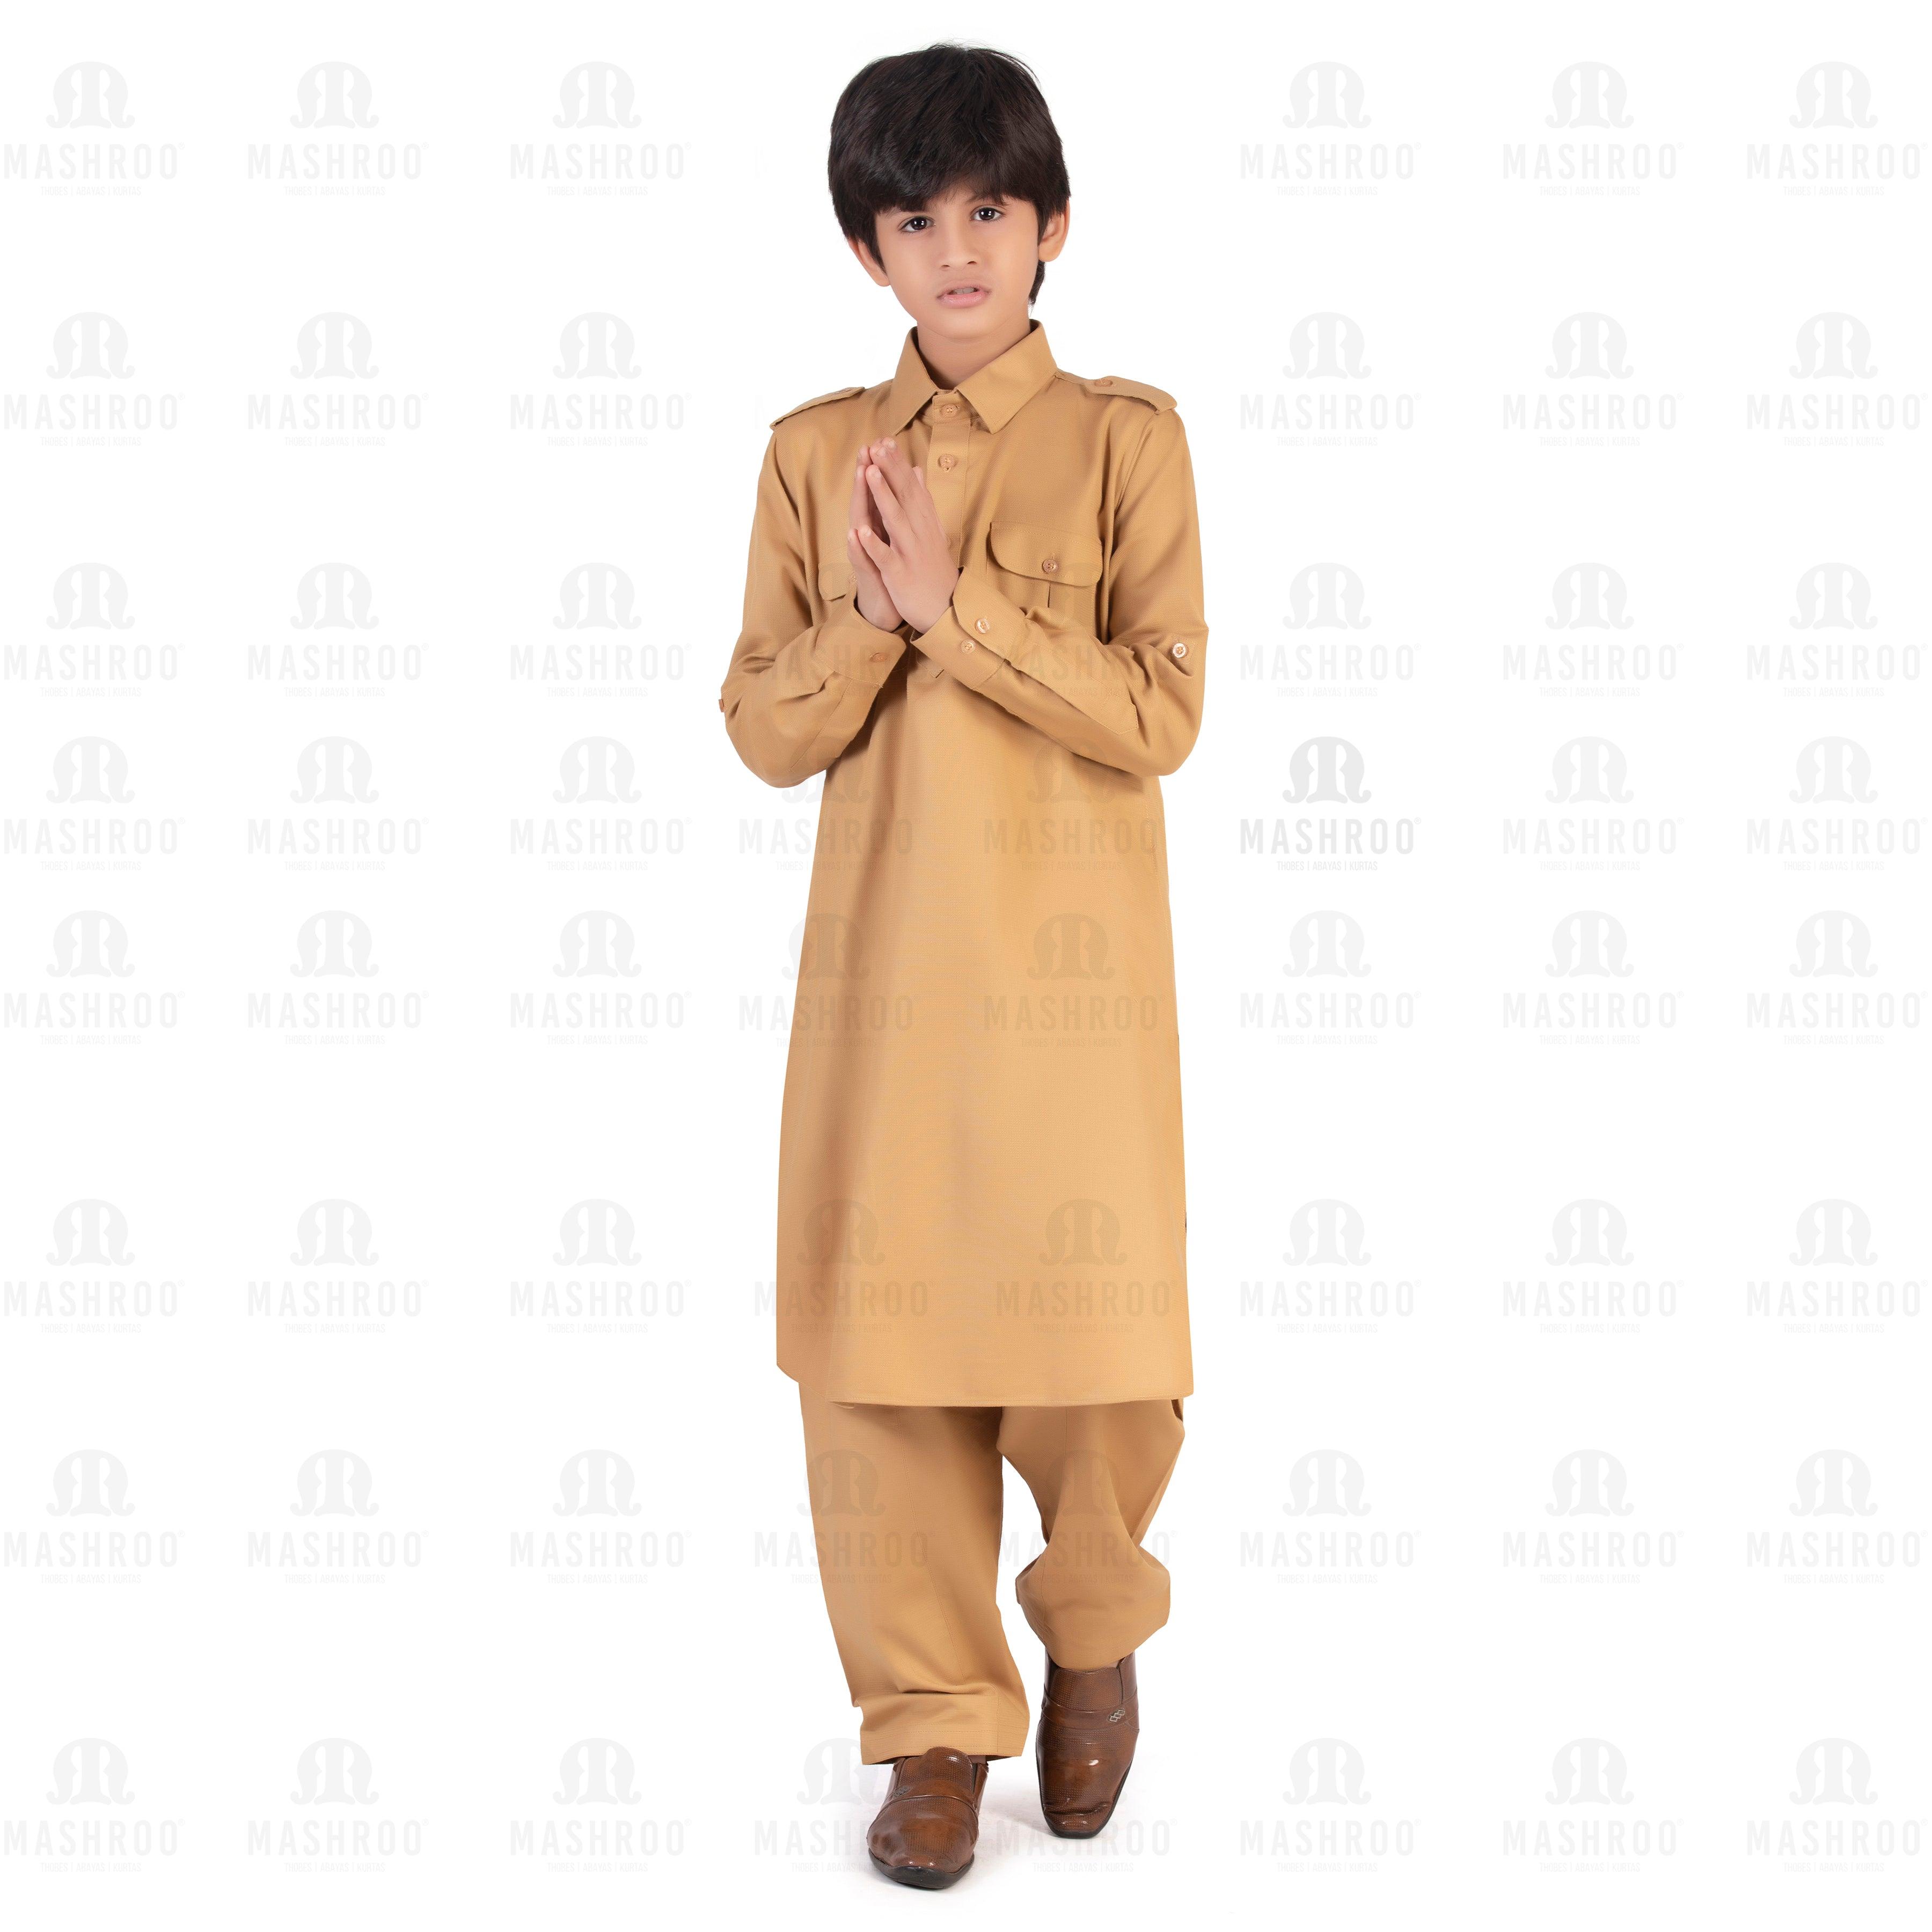 Gold Pathani Suit for Boys - Mashroo